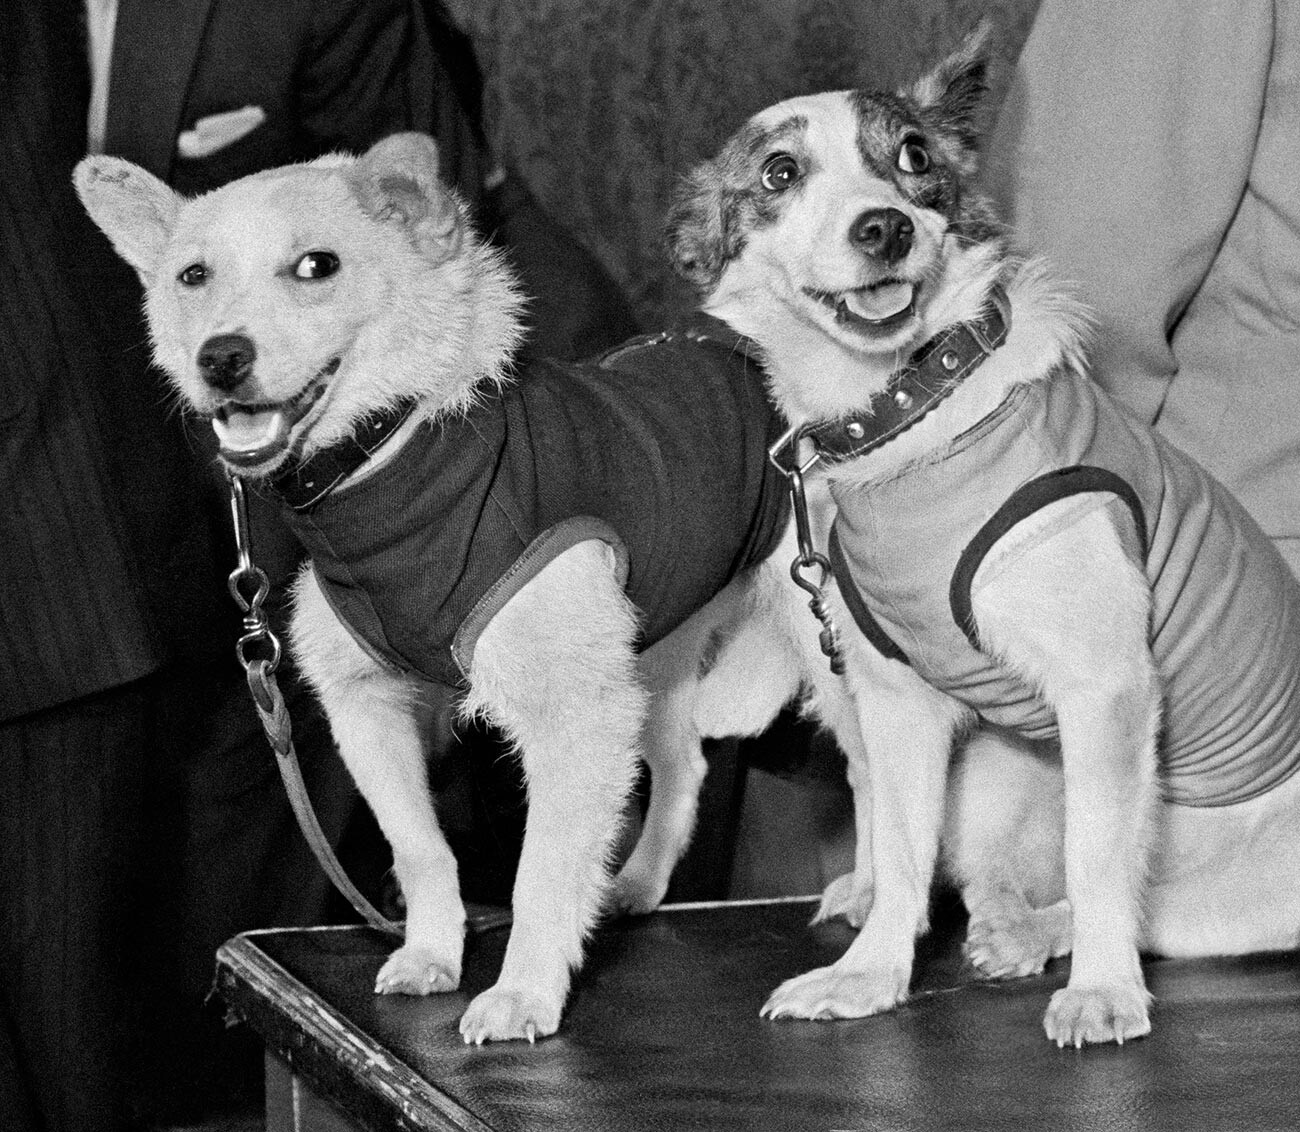 Soviet space dogs Belka and Strelka